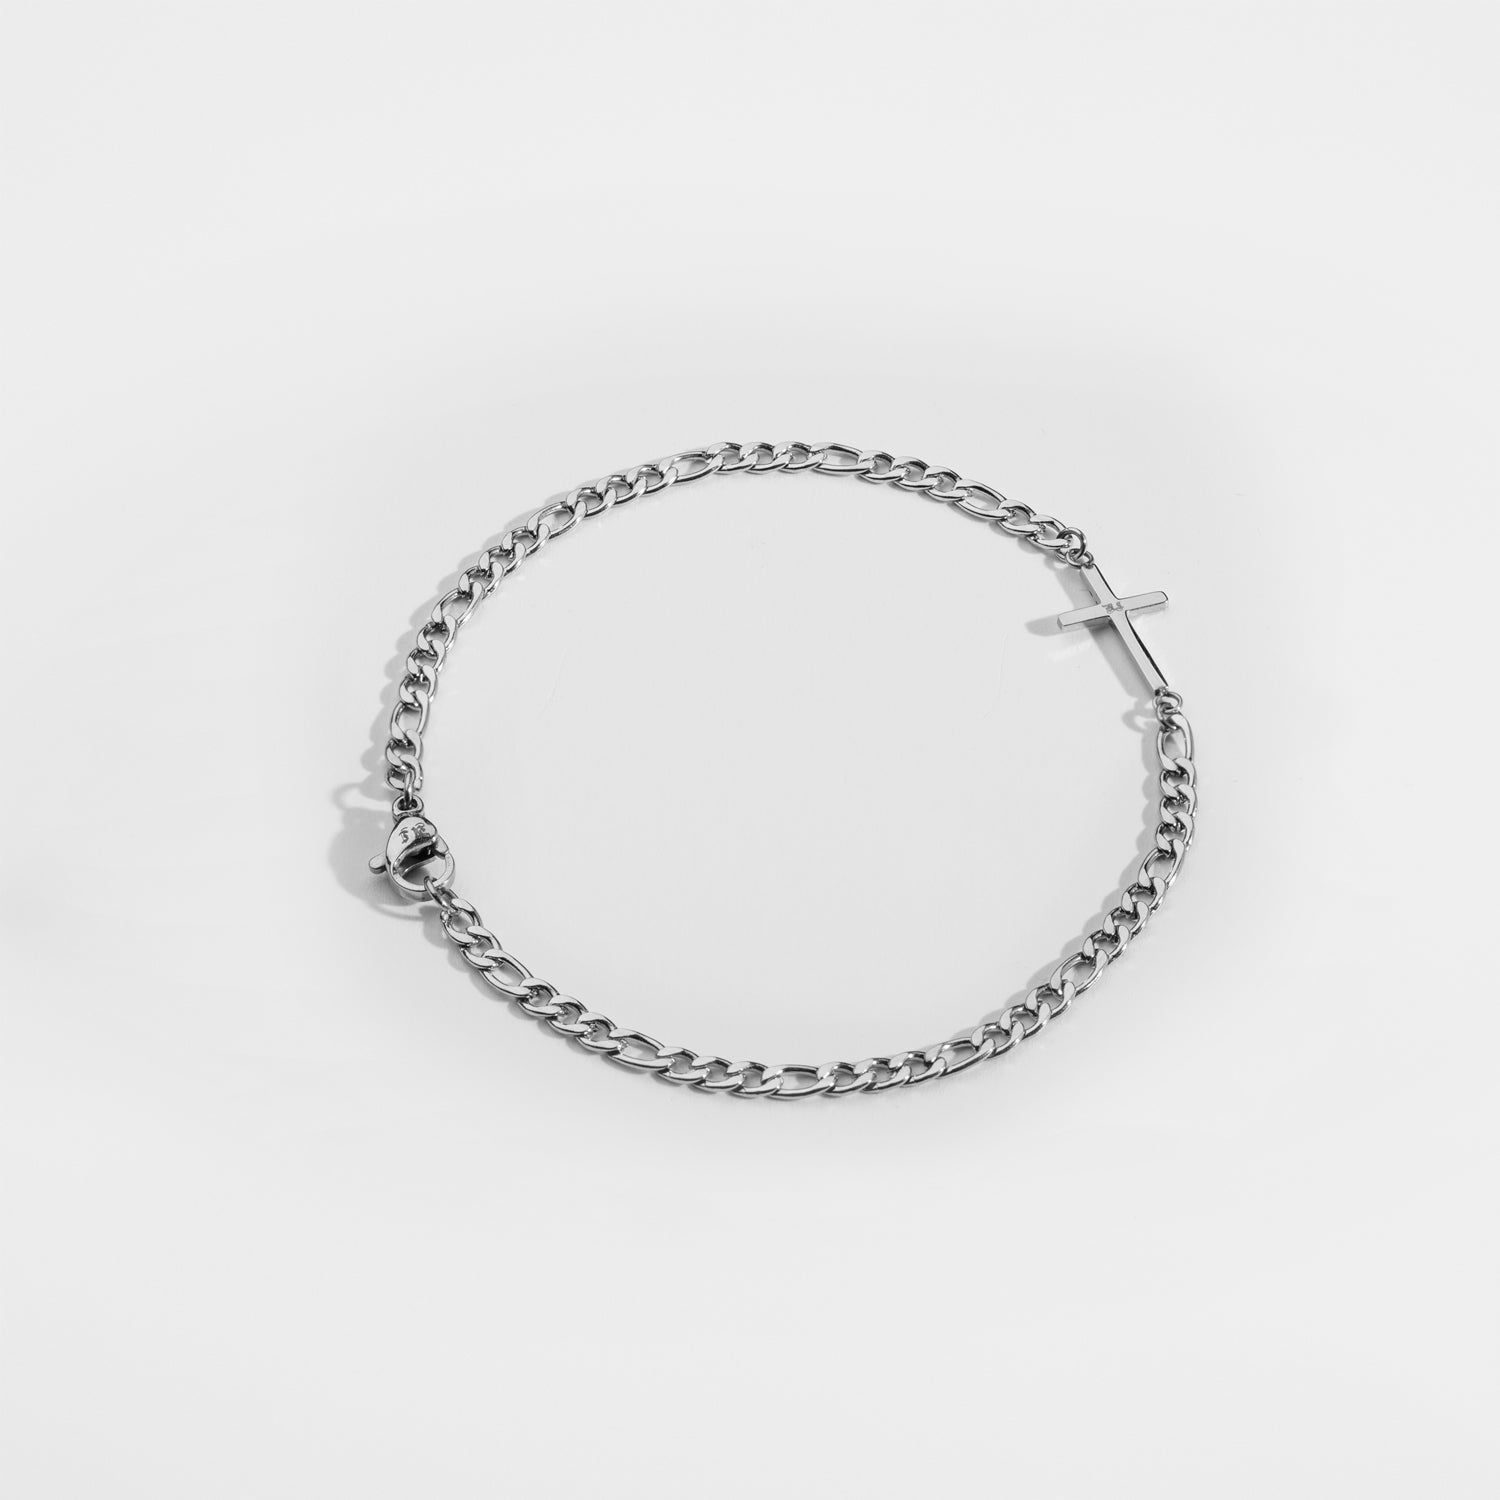 NL Antique Cross bracelet - Silver-toned